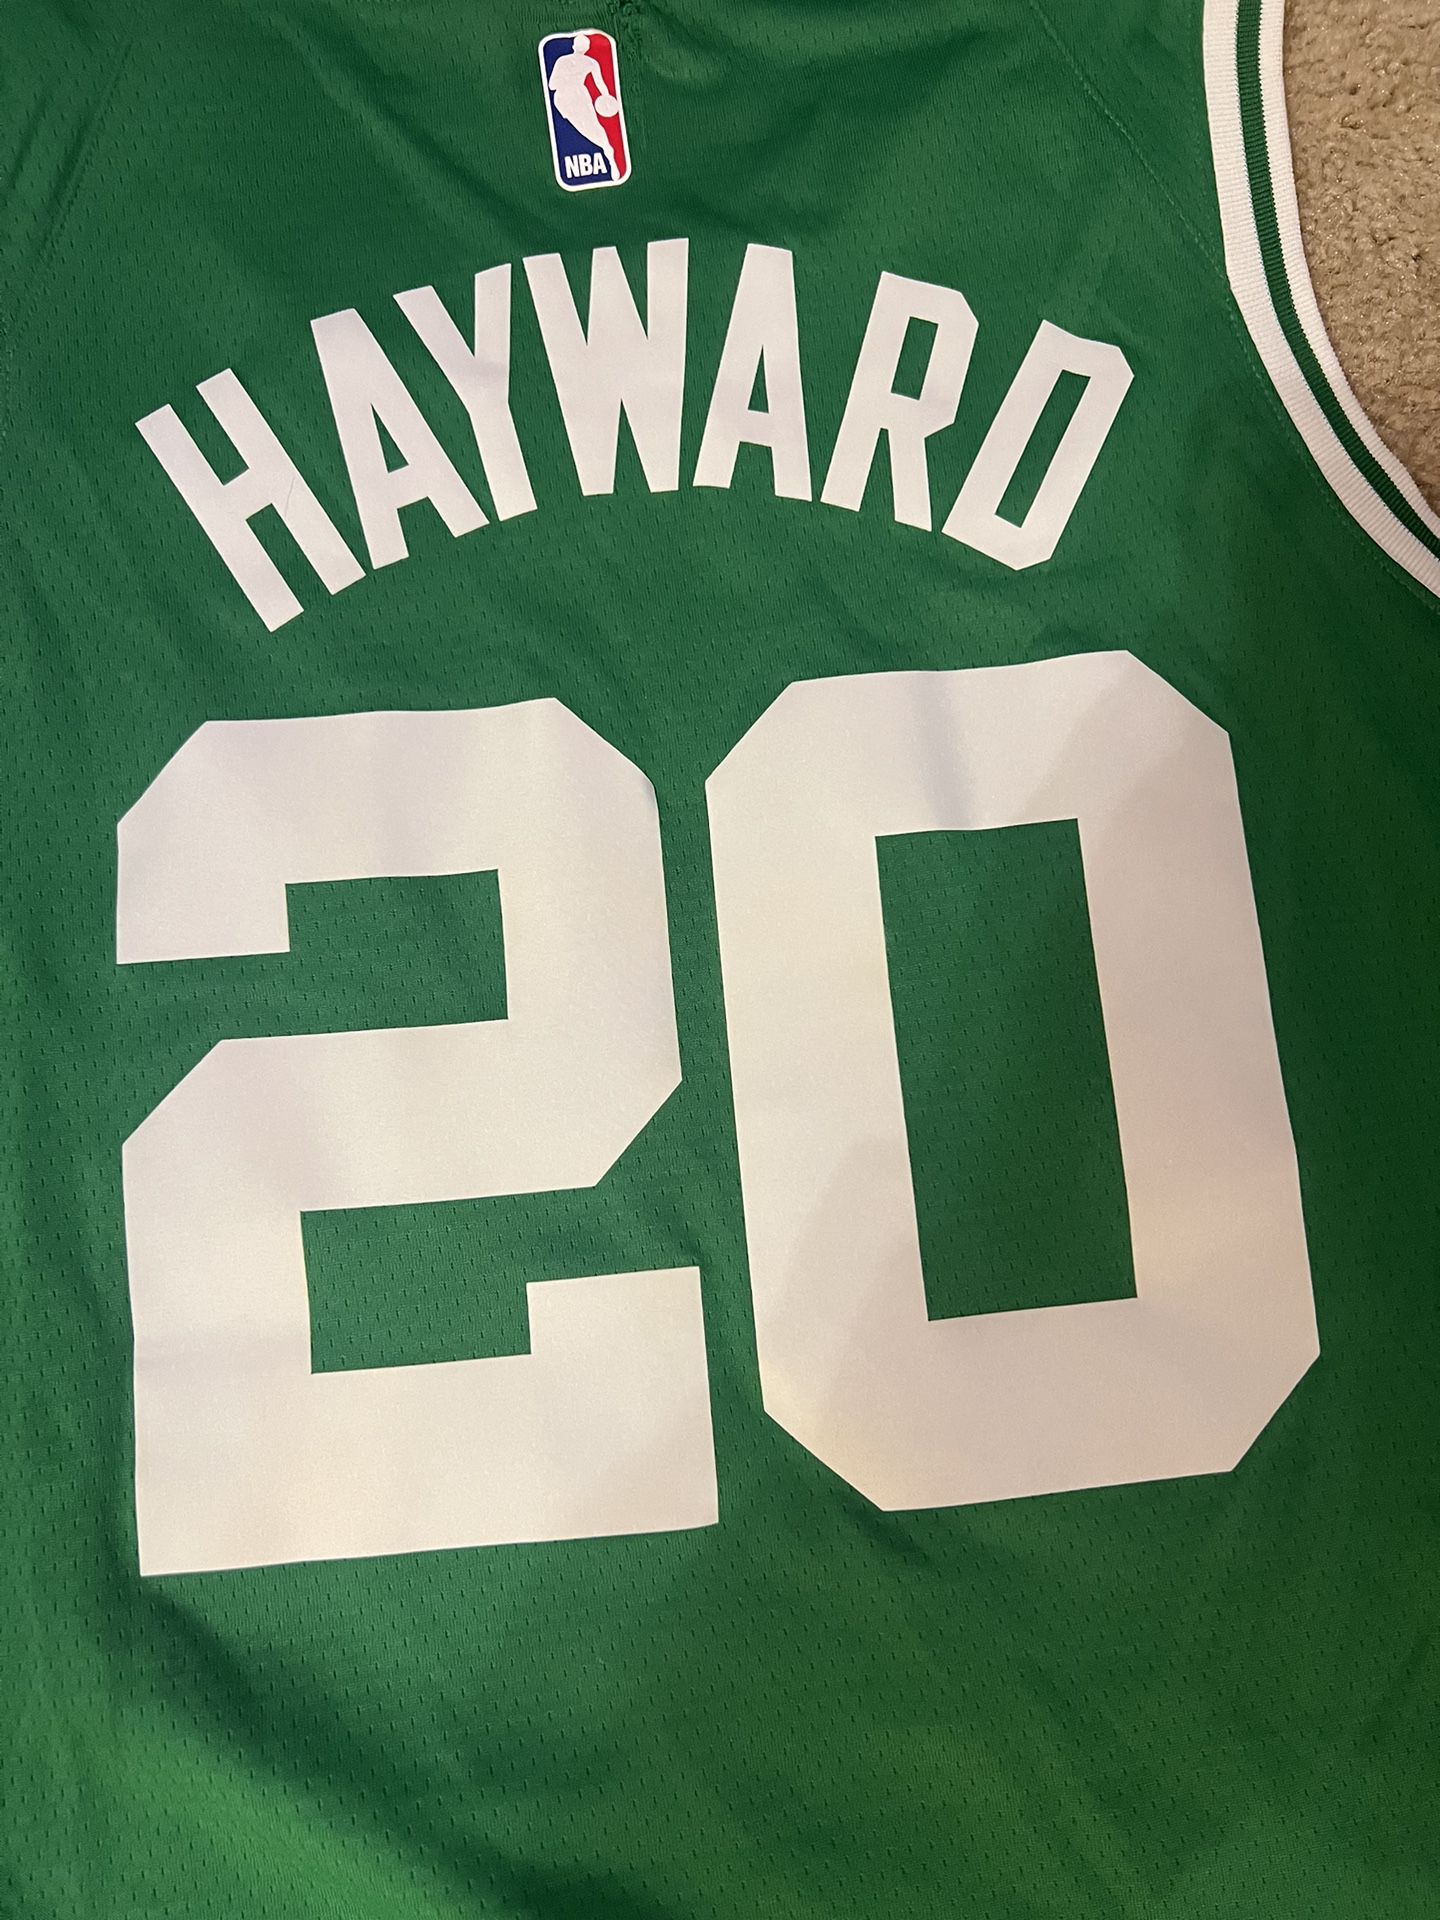 Gordon Hayward Boston Celtics Nike 2019/20 Swingman Player